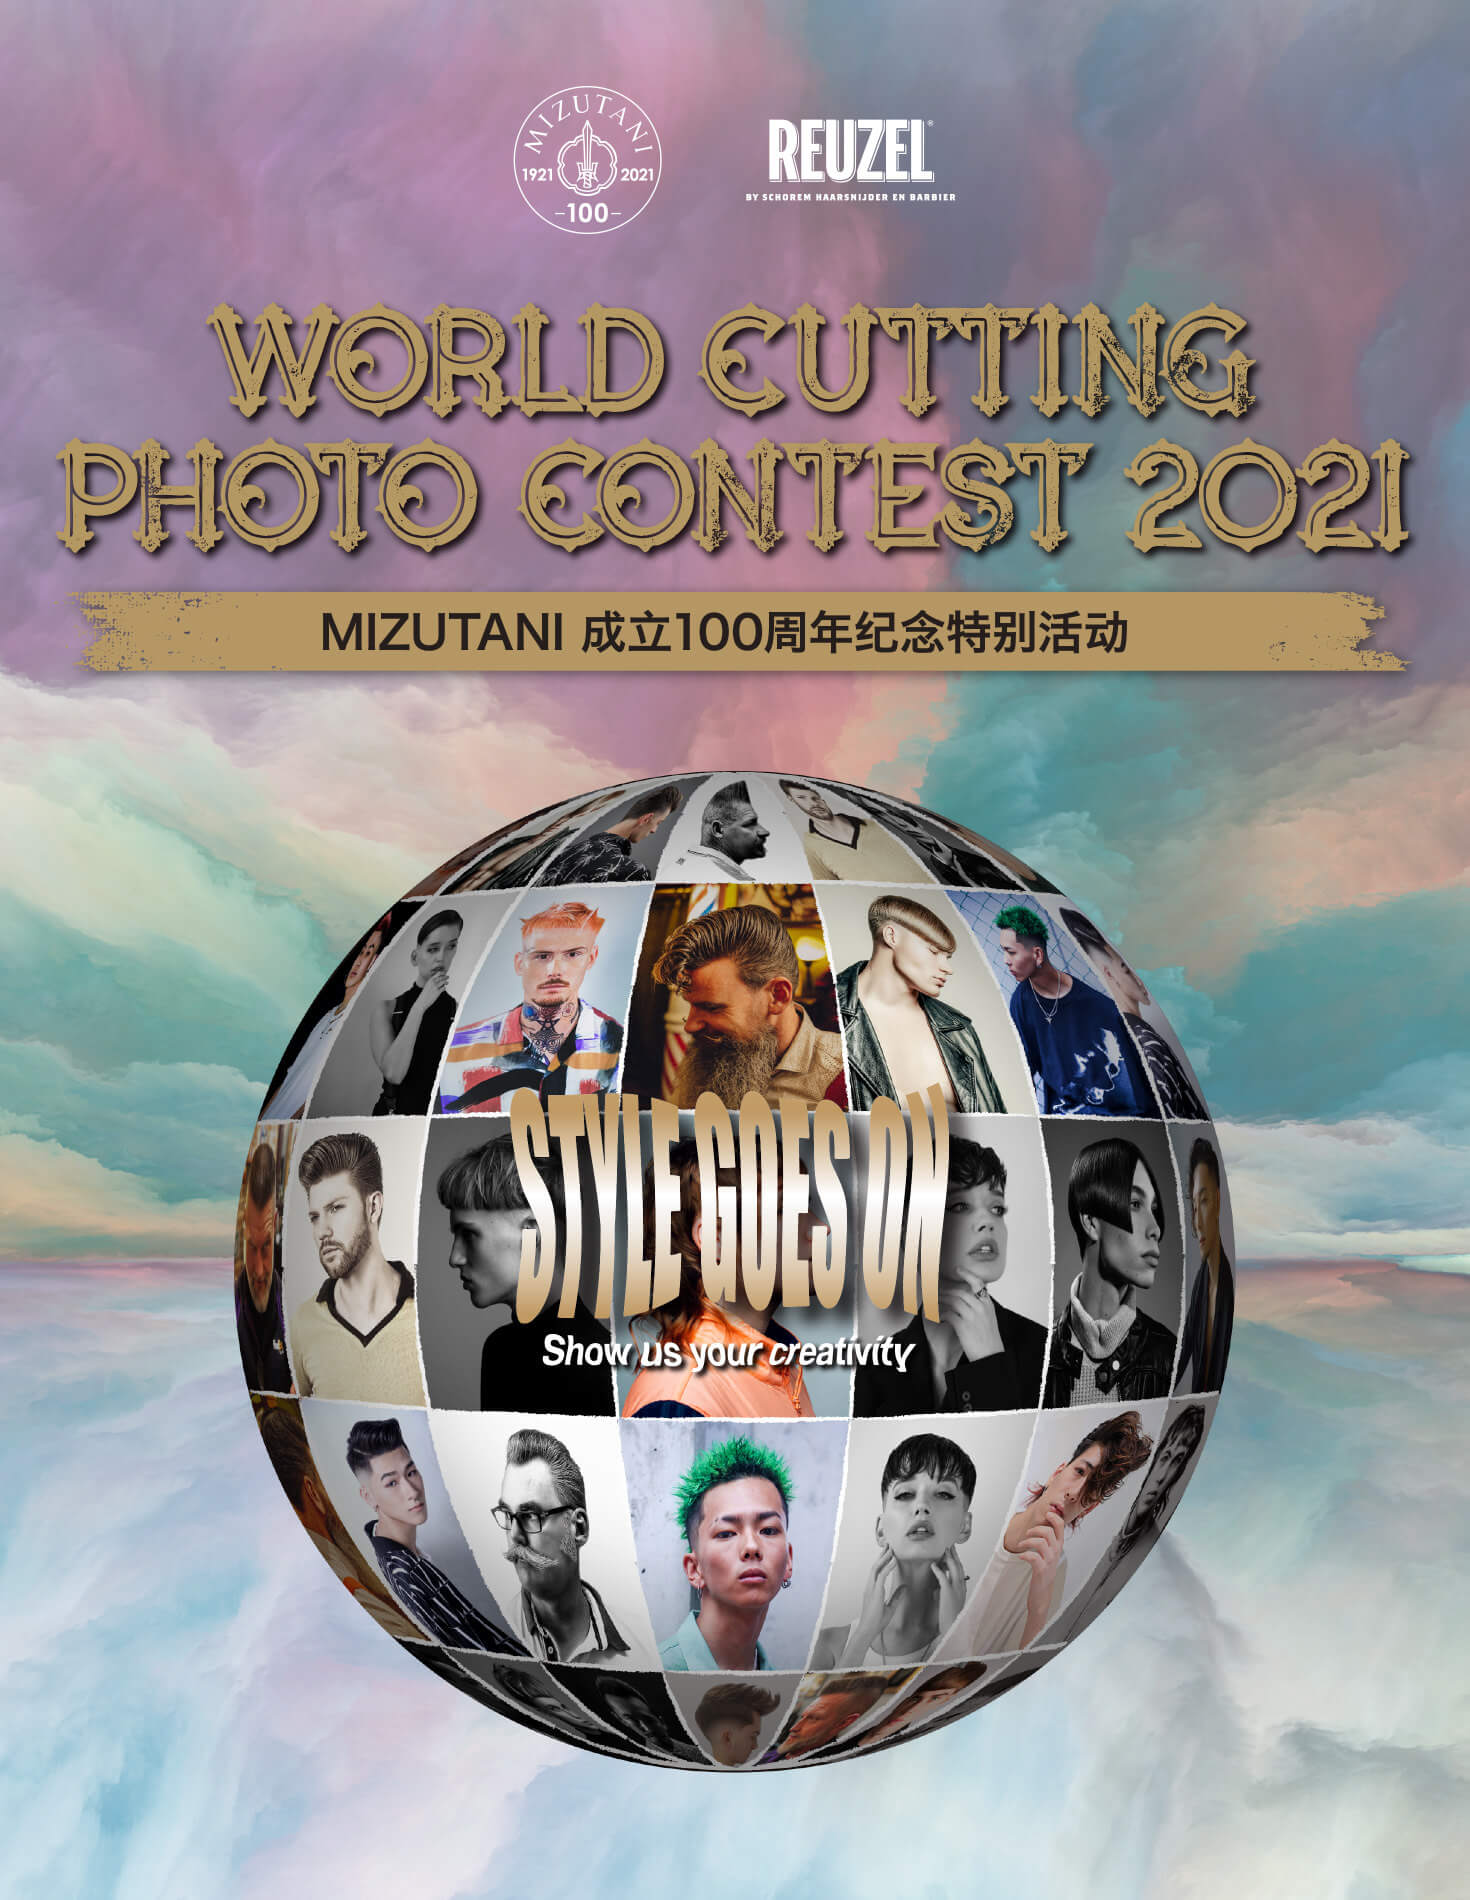 WORLD CUTTING PHOTO CONTEST 2021